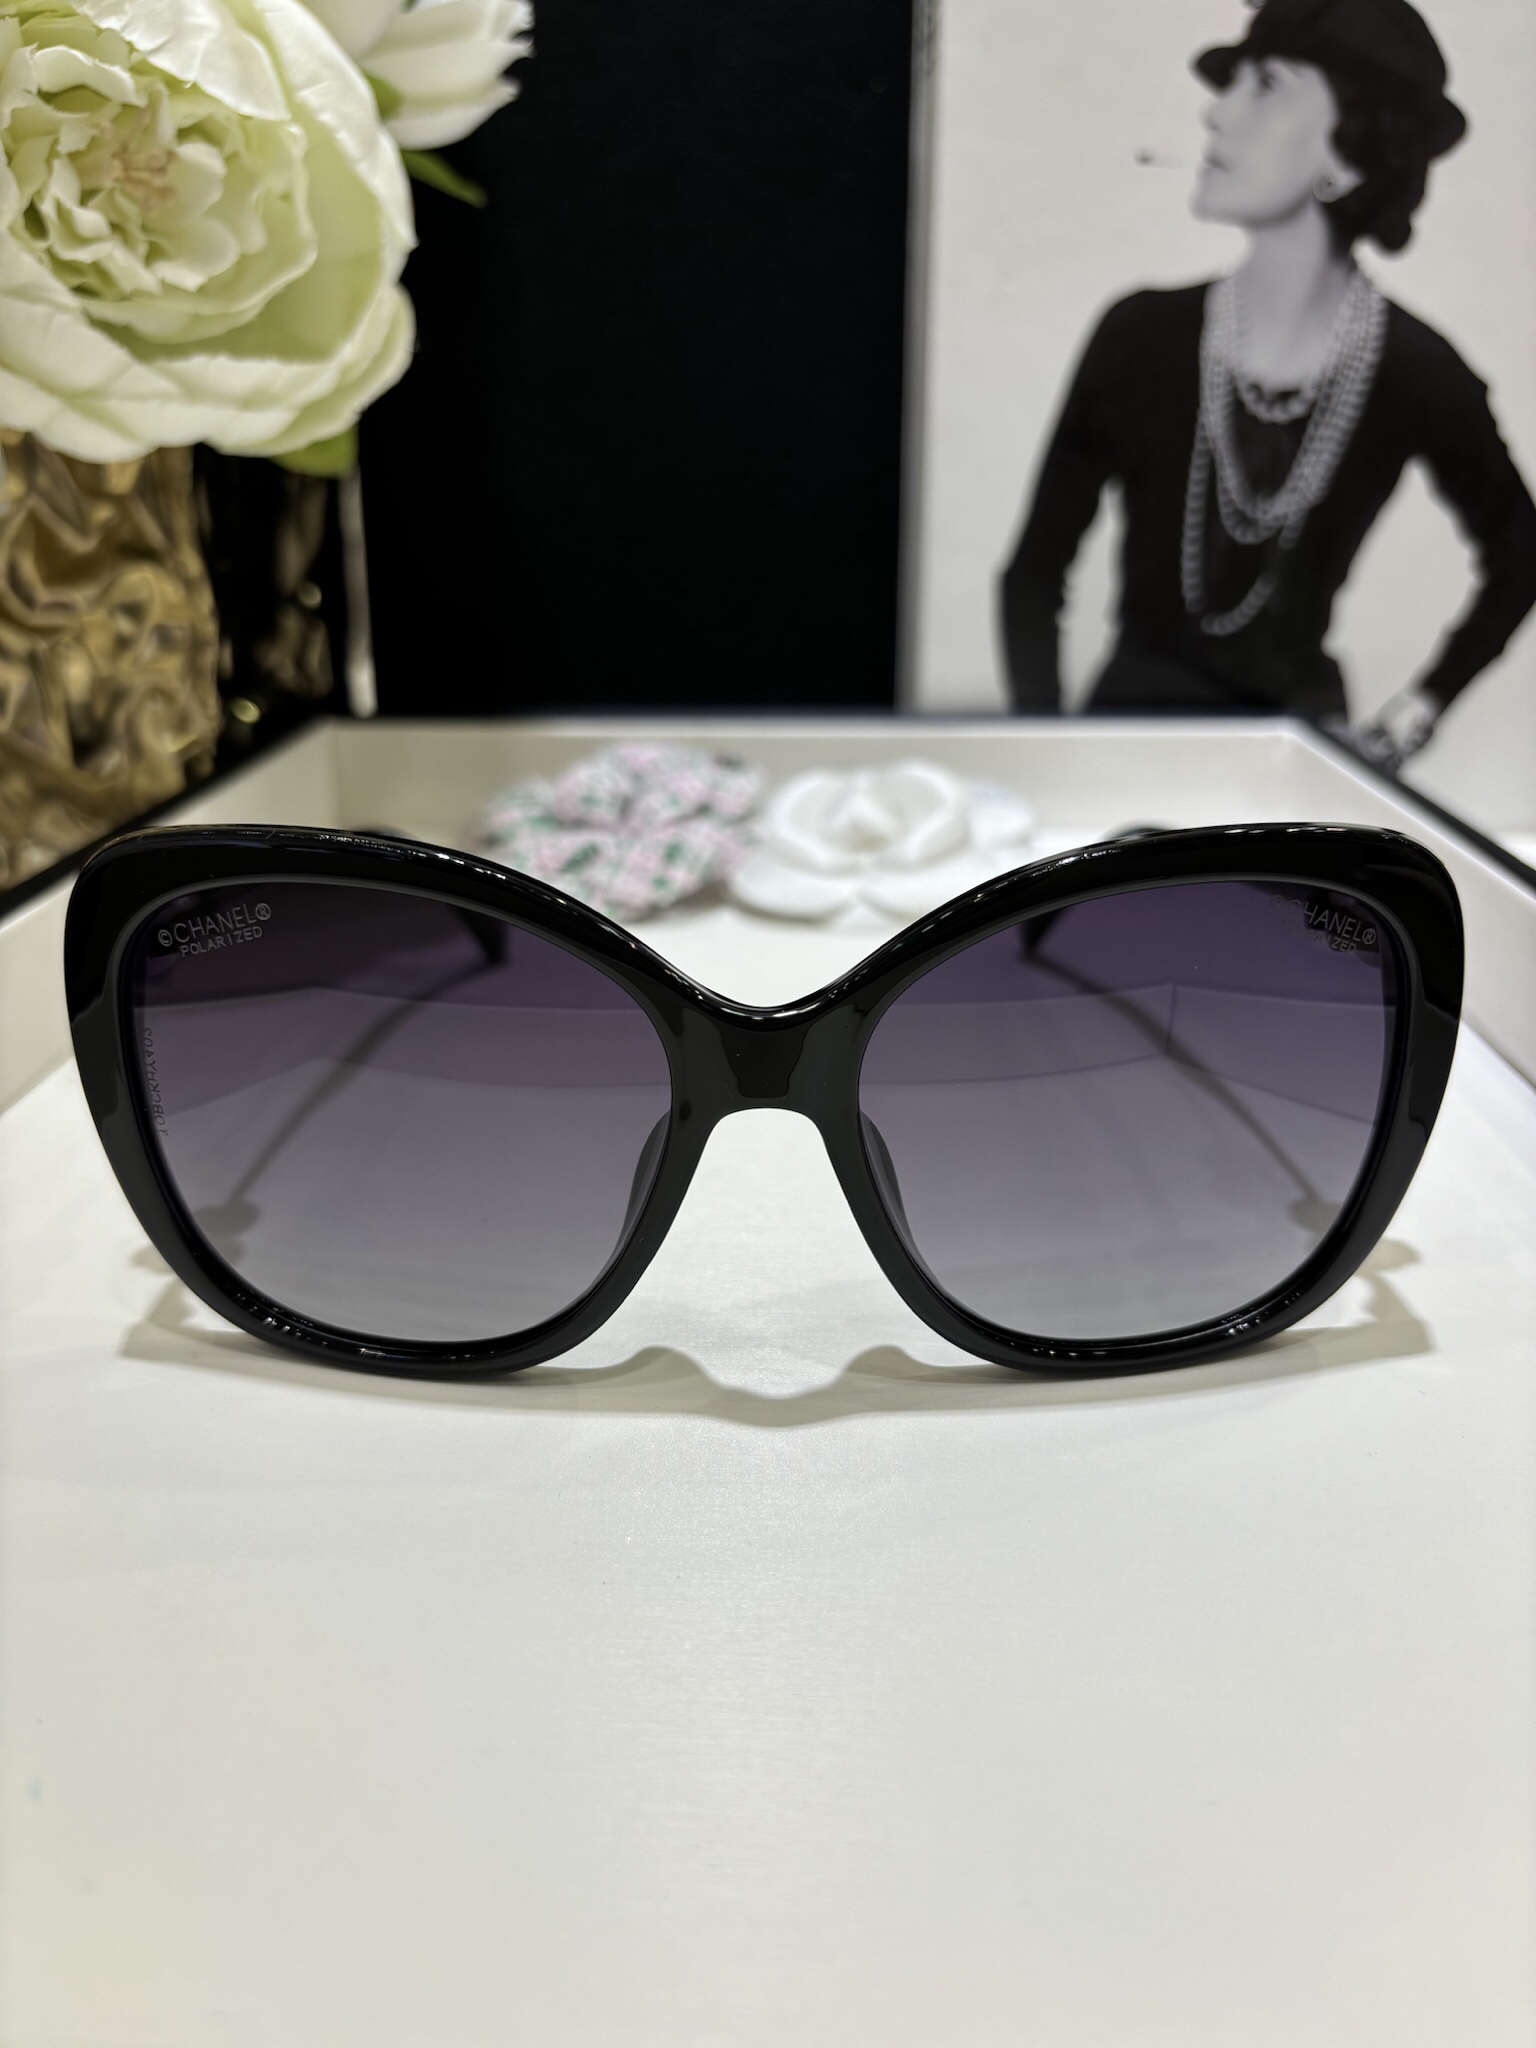 zsdqwCH5339墨镜经典珍珠装饰太阳眼镜️jinnie.古力娜扎同框框，大框好遮阳，显脸小，佩戴舒适.防嗮同时气质优雅，配齐包装一套.